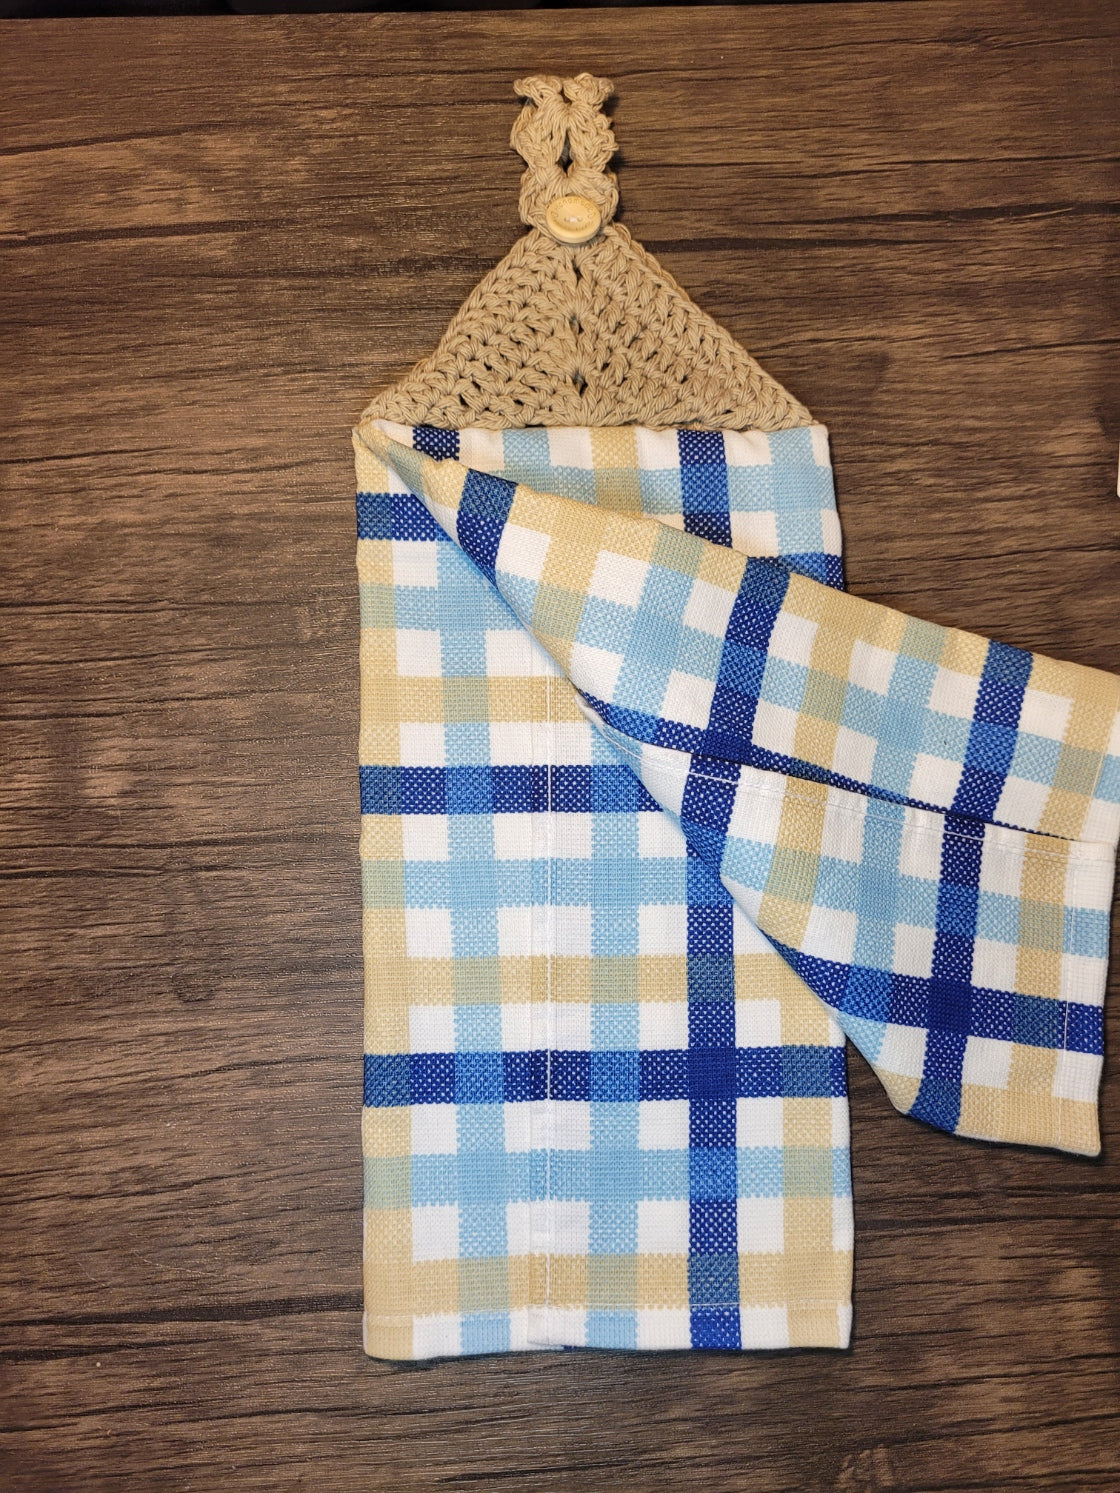 Towel - Blue/Tan Checkered "Home"